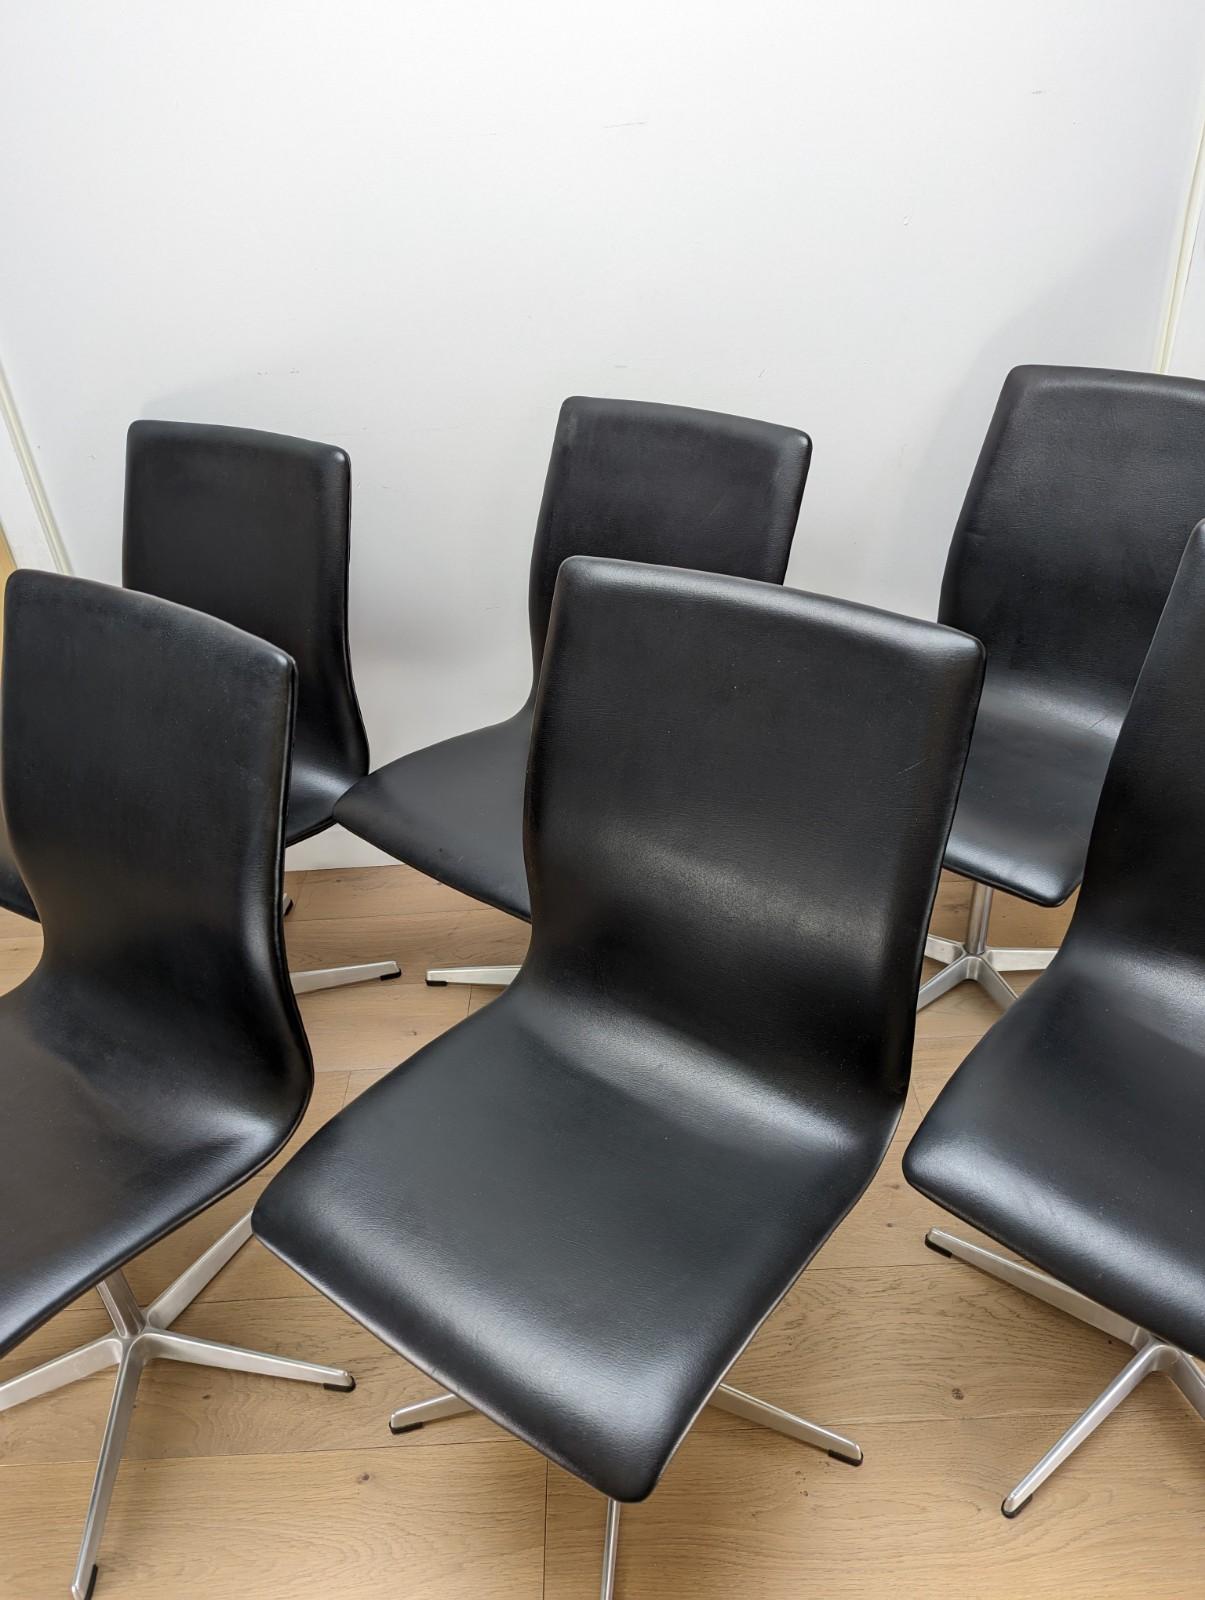 4 x Arne Jacobsen Oxford Chairs by Fritz Hansen, Black Vinyl and Aluminium Legs For Sale 1